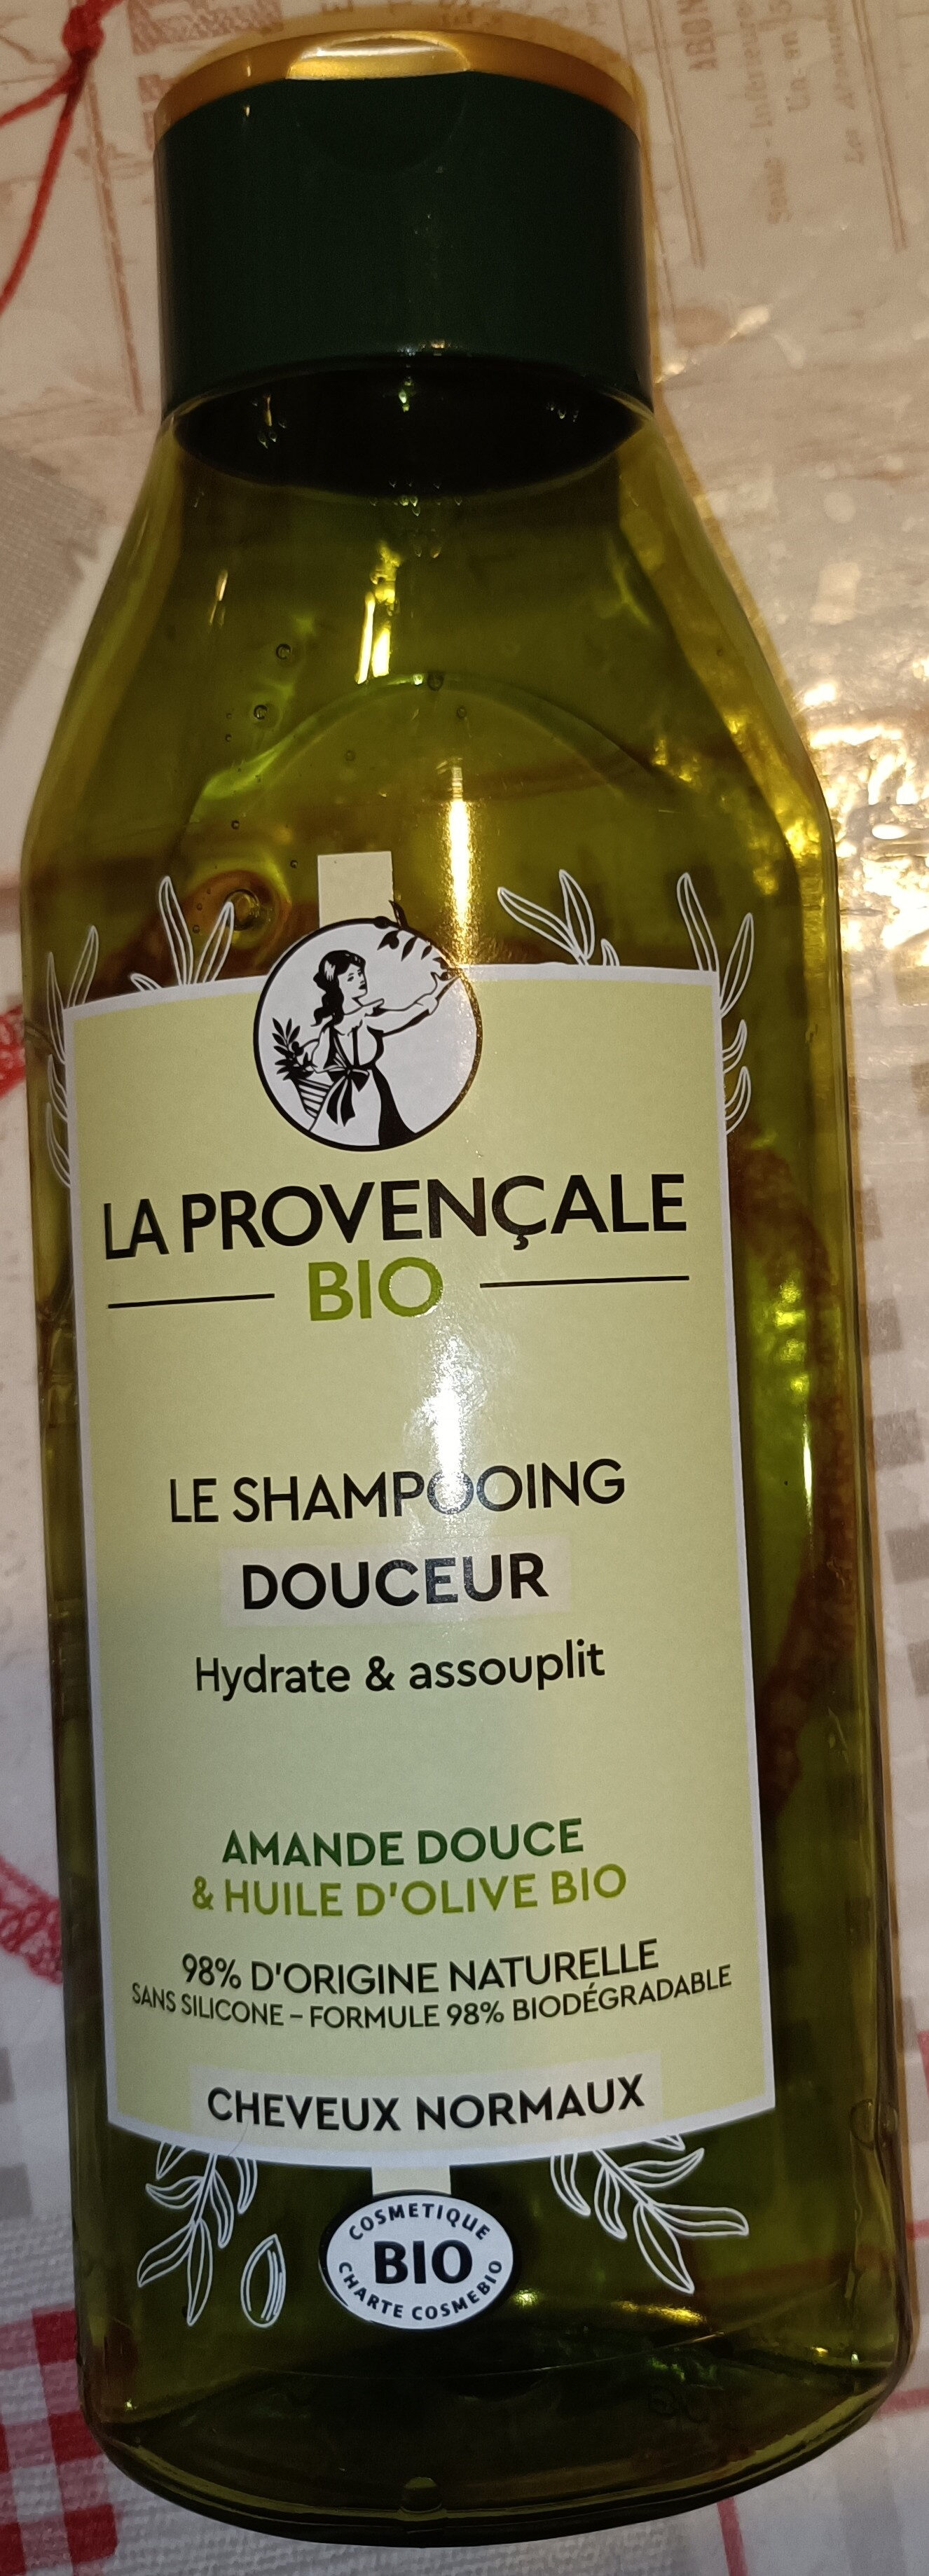 Le shampooing douceur - 製品 - fr